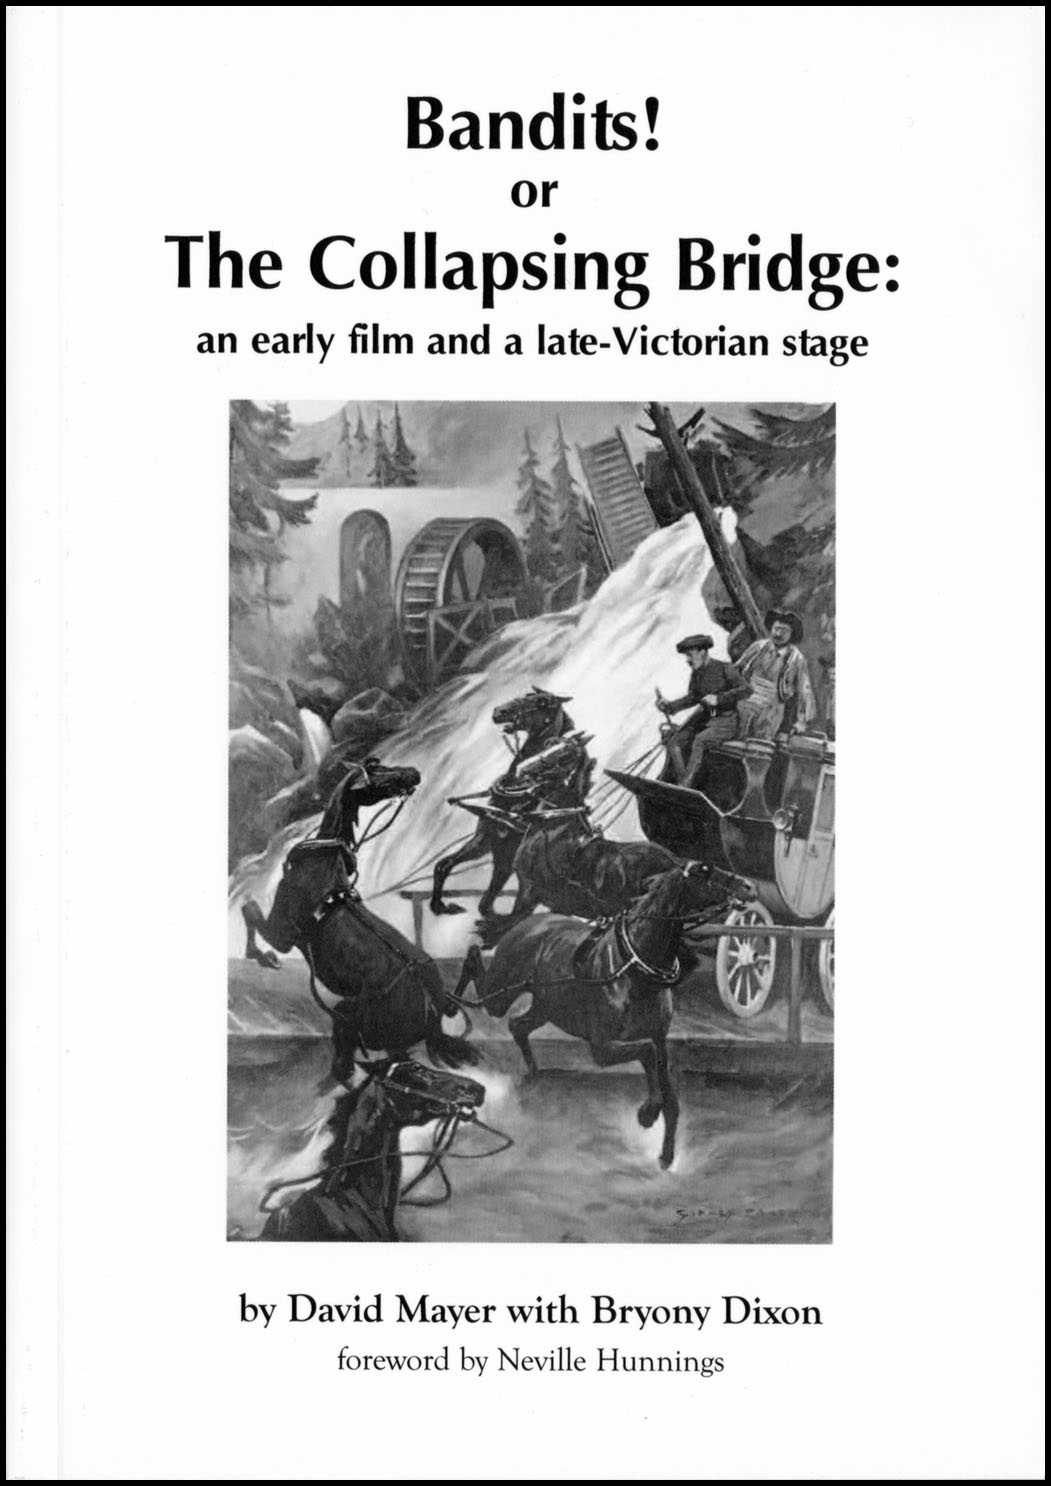 Bandits! or The Collapsing Bridge